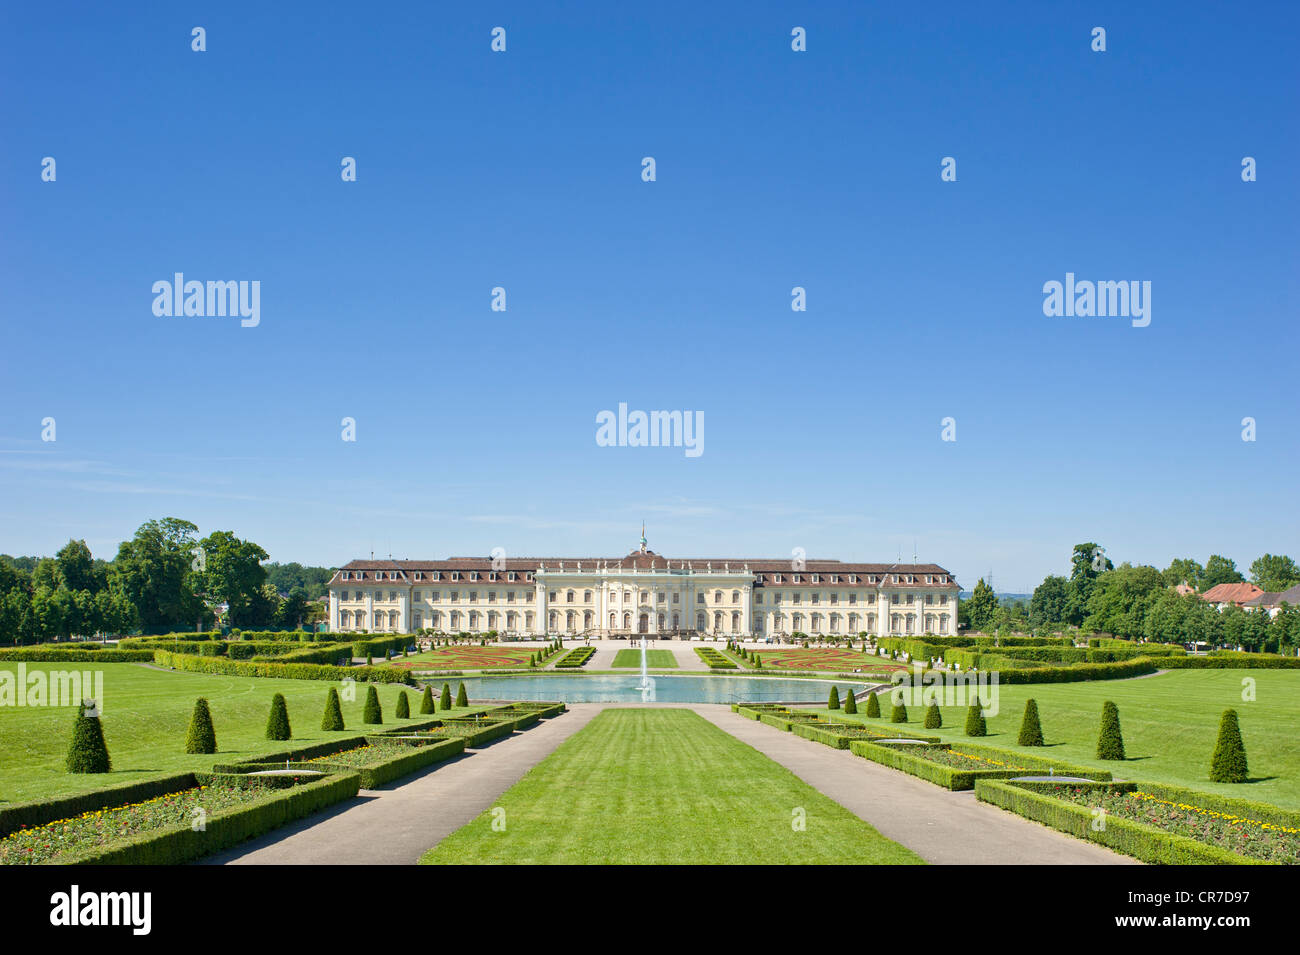 Barock in Bloom, Schloss Ludwigsburg, Ludwigsburg, Neckar, Baden-Württemberg, Deutschland, Europa Stockfoto